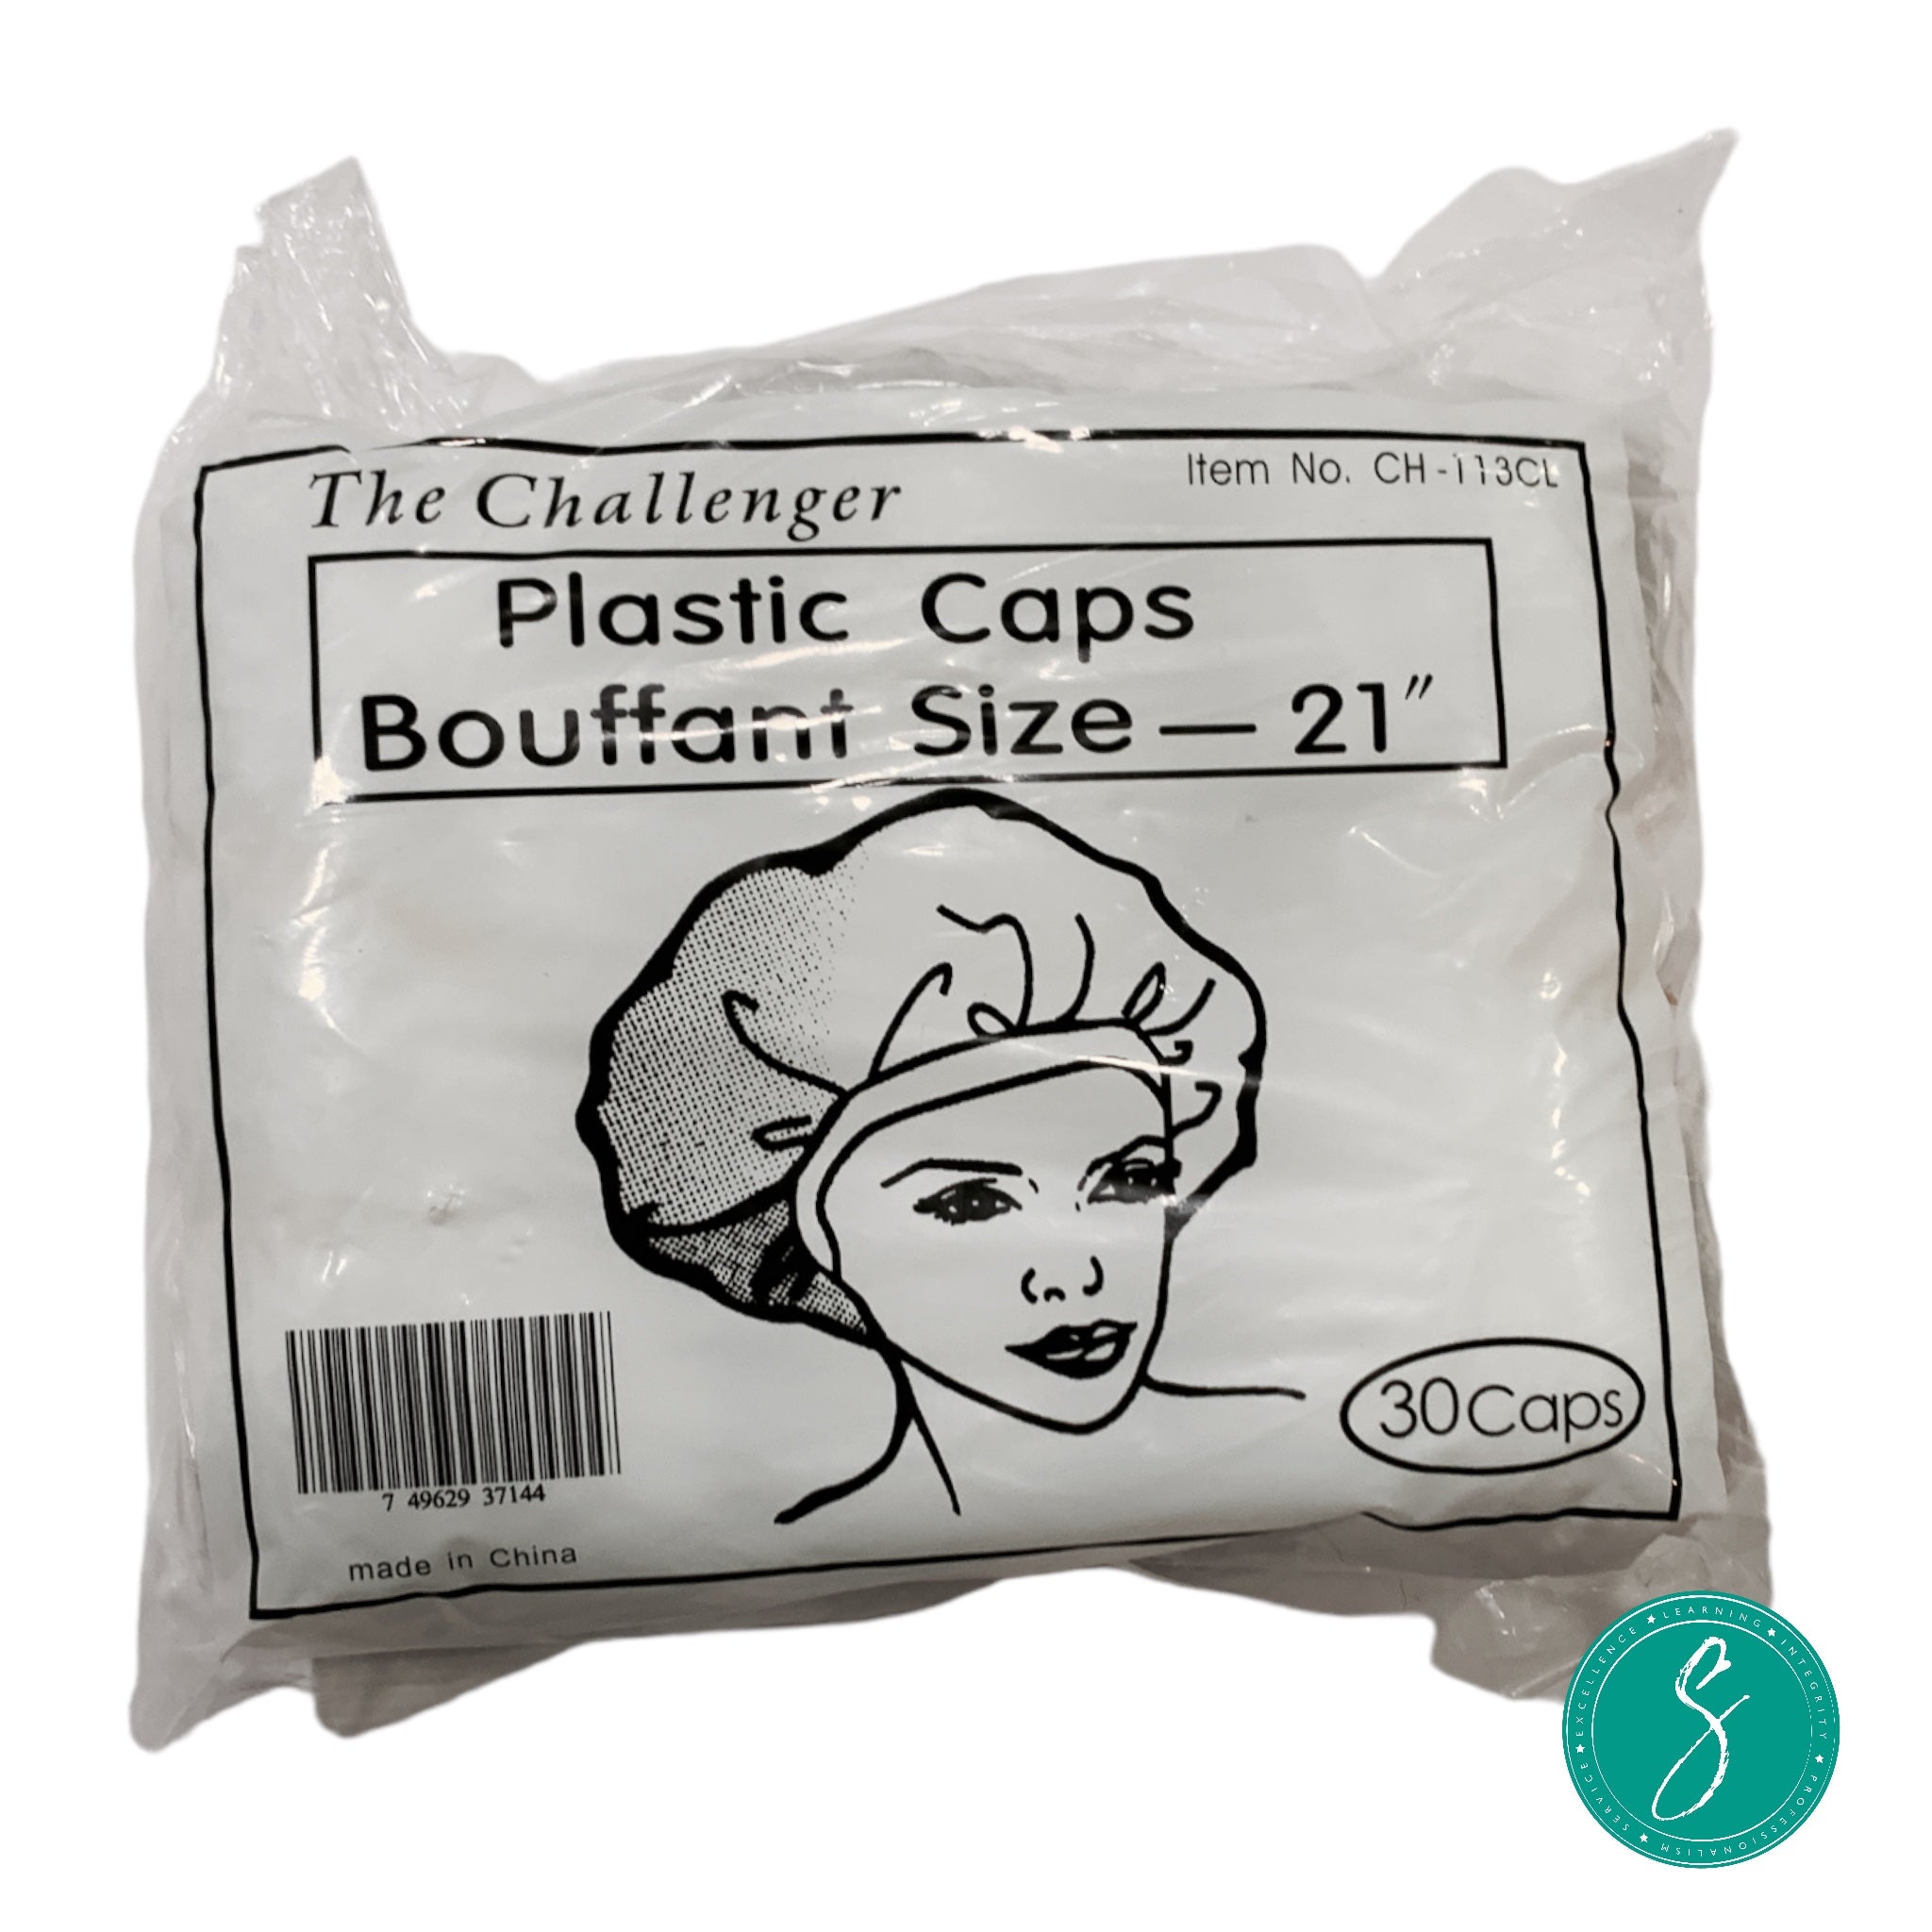 Plastic Caps Boufant Size - 21"